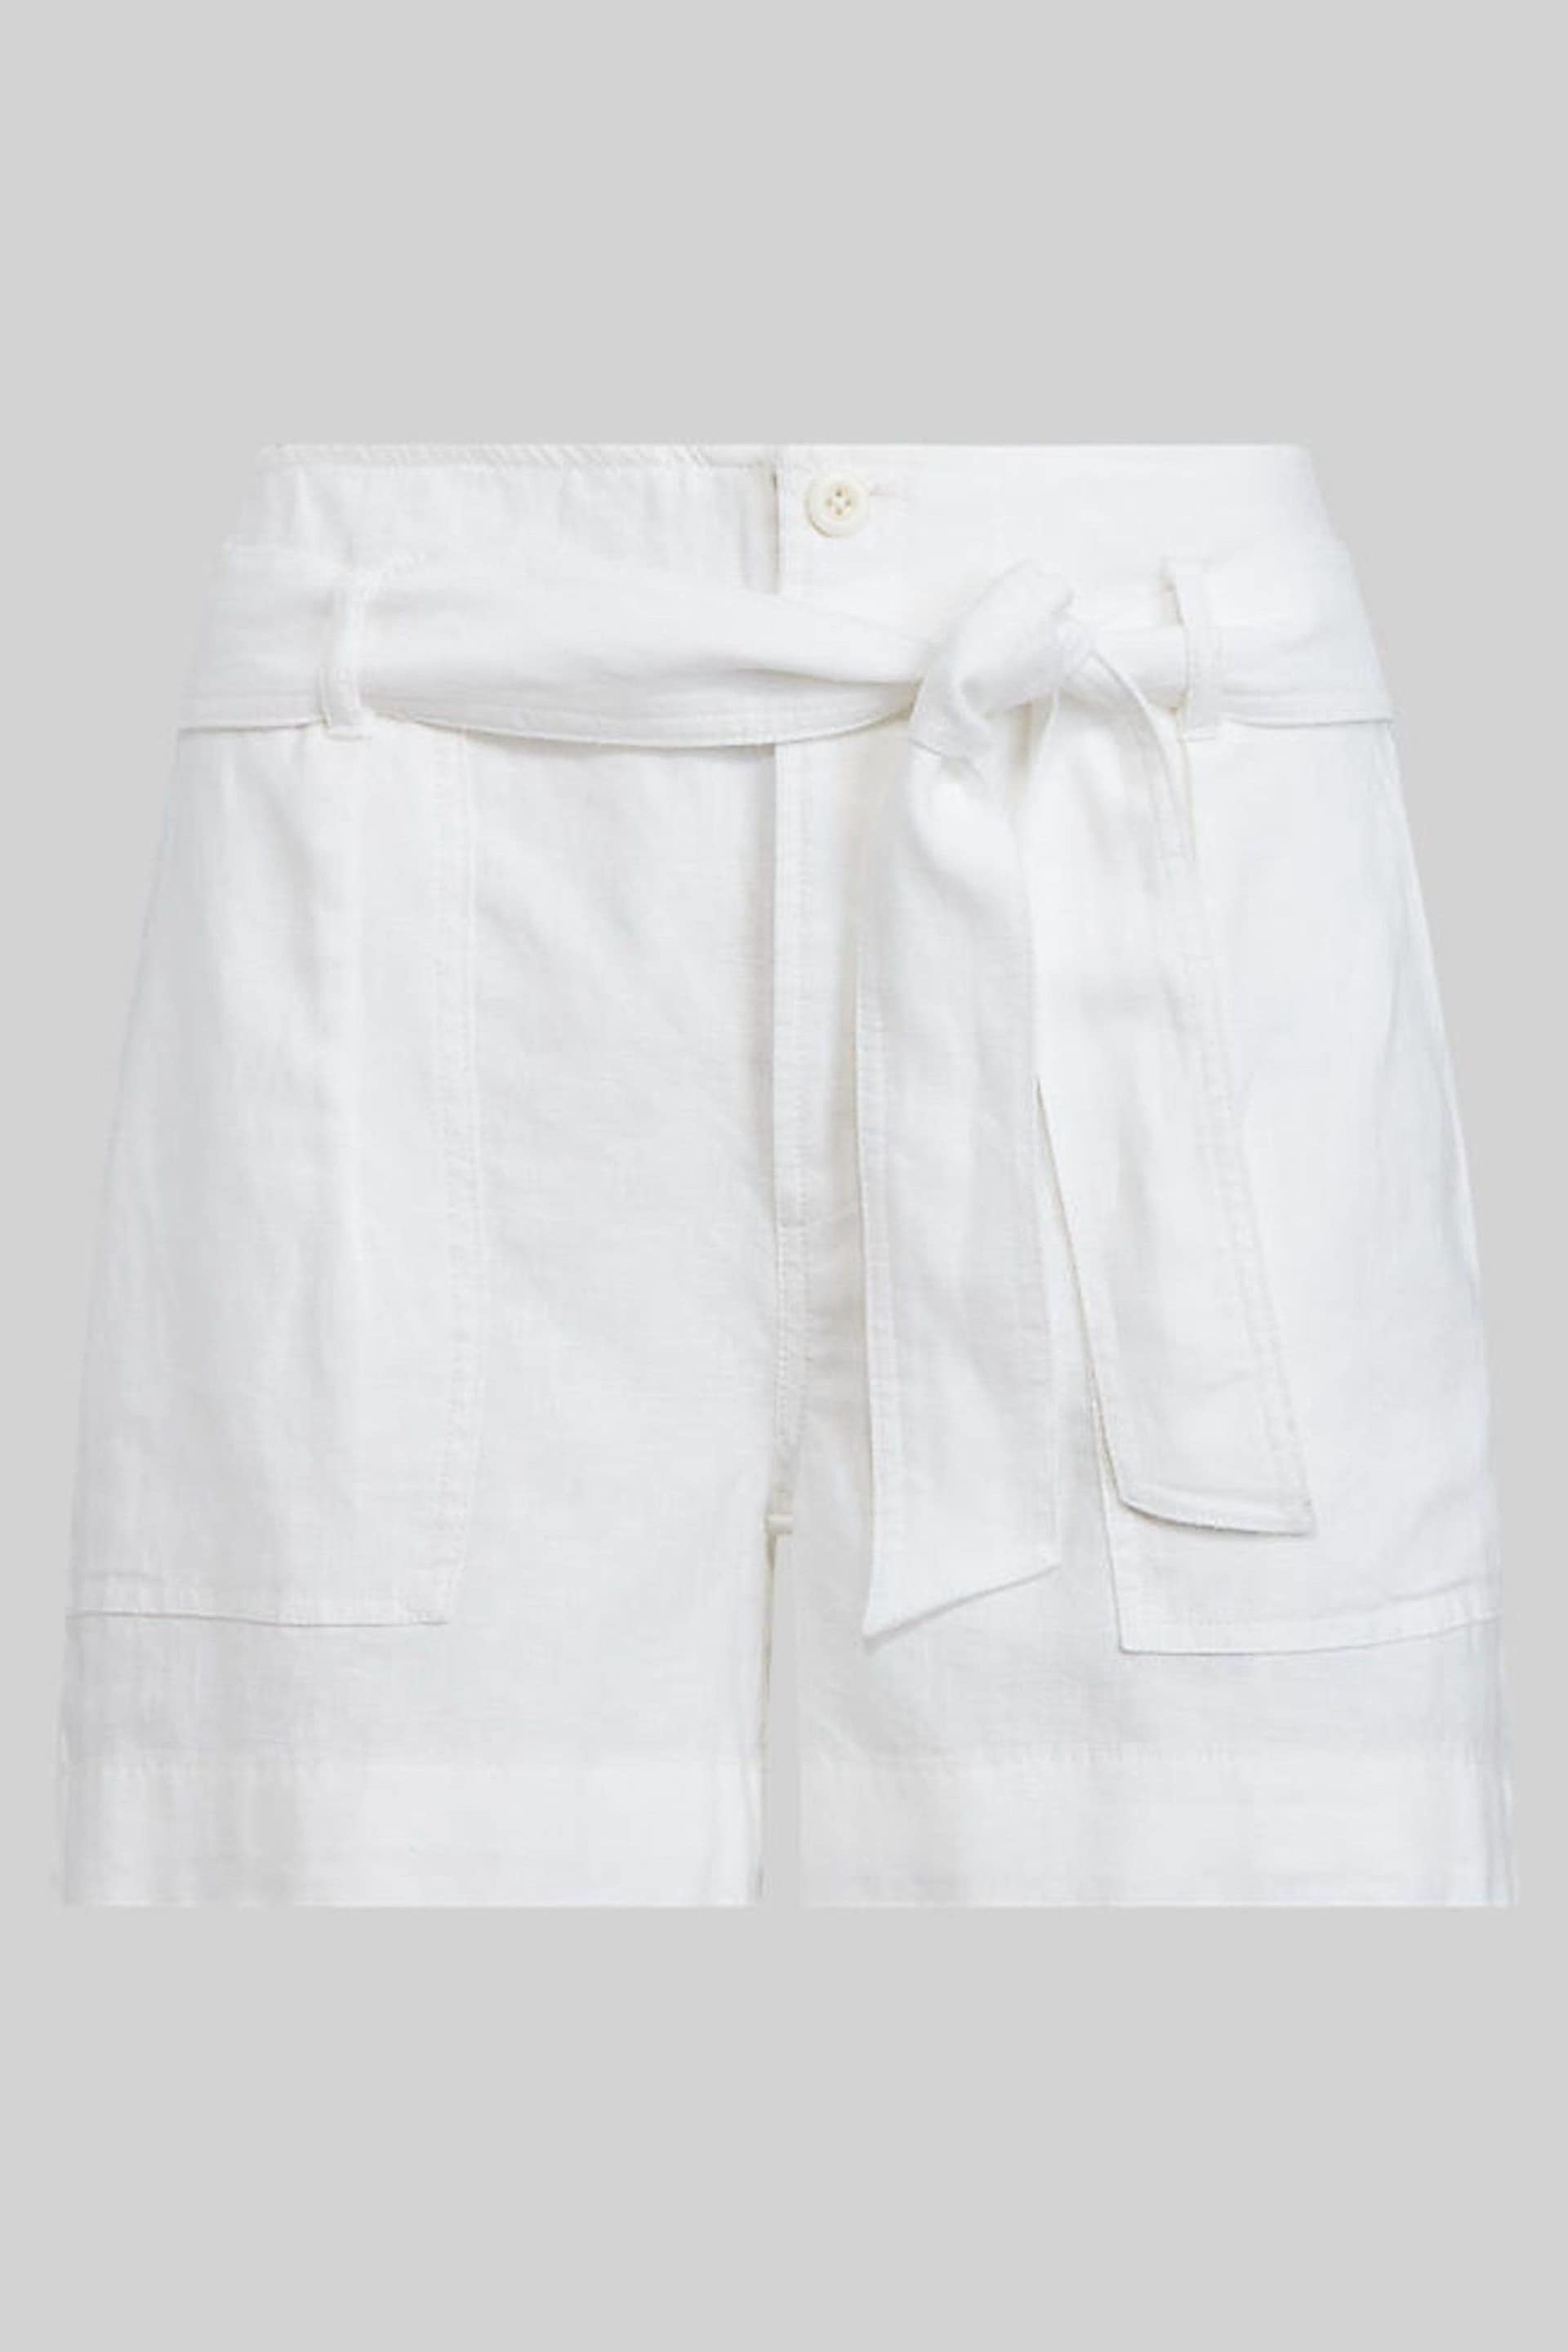 Lauren Ralph Lauren Daviana Soft Drape Linen Tie Waist Shorts - Image 6 of 6